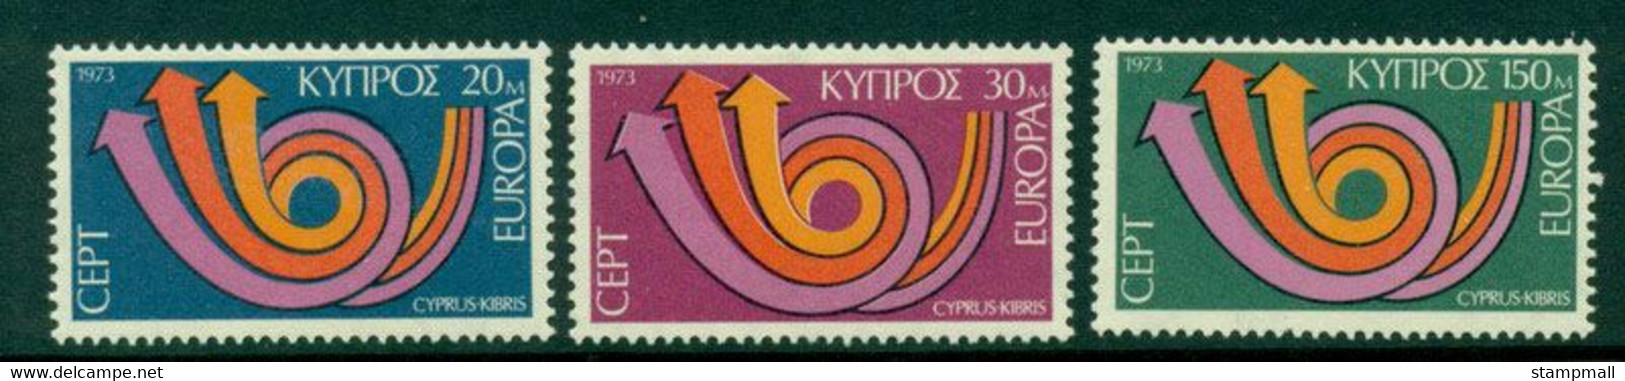 Cyprus 1973 Europa MUH Lot16744 - Unused Stamps